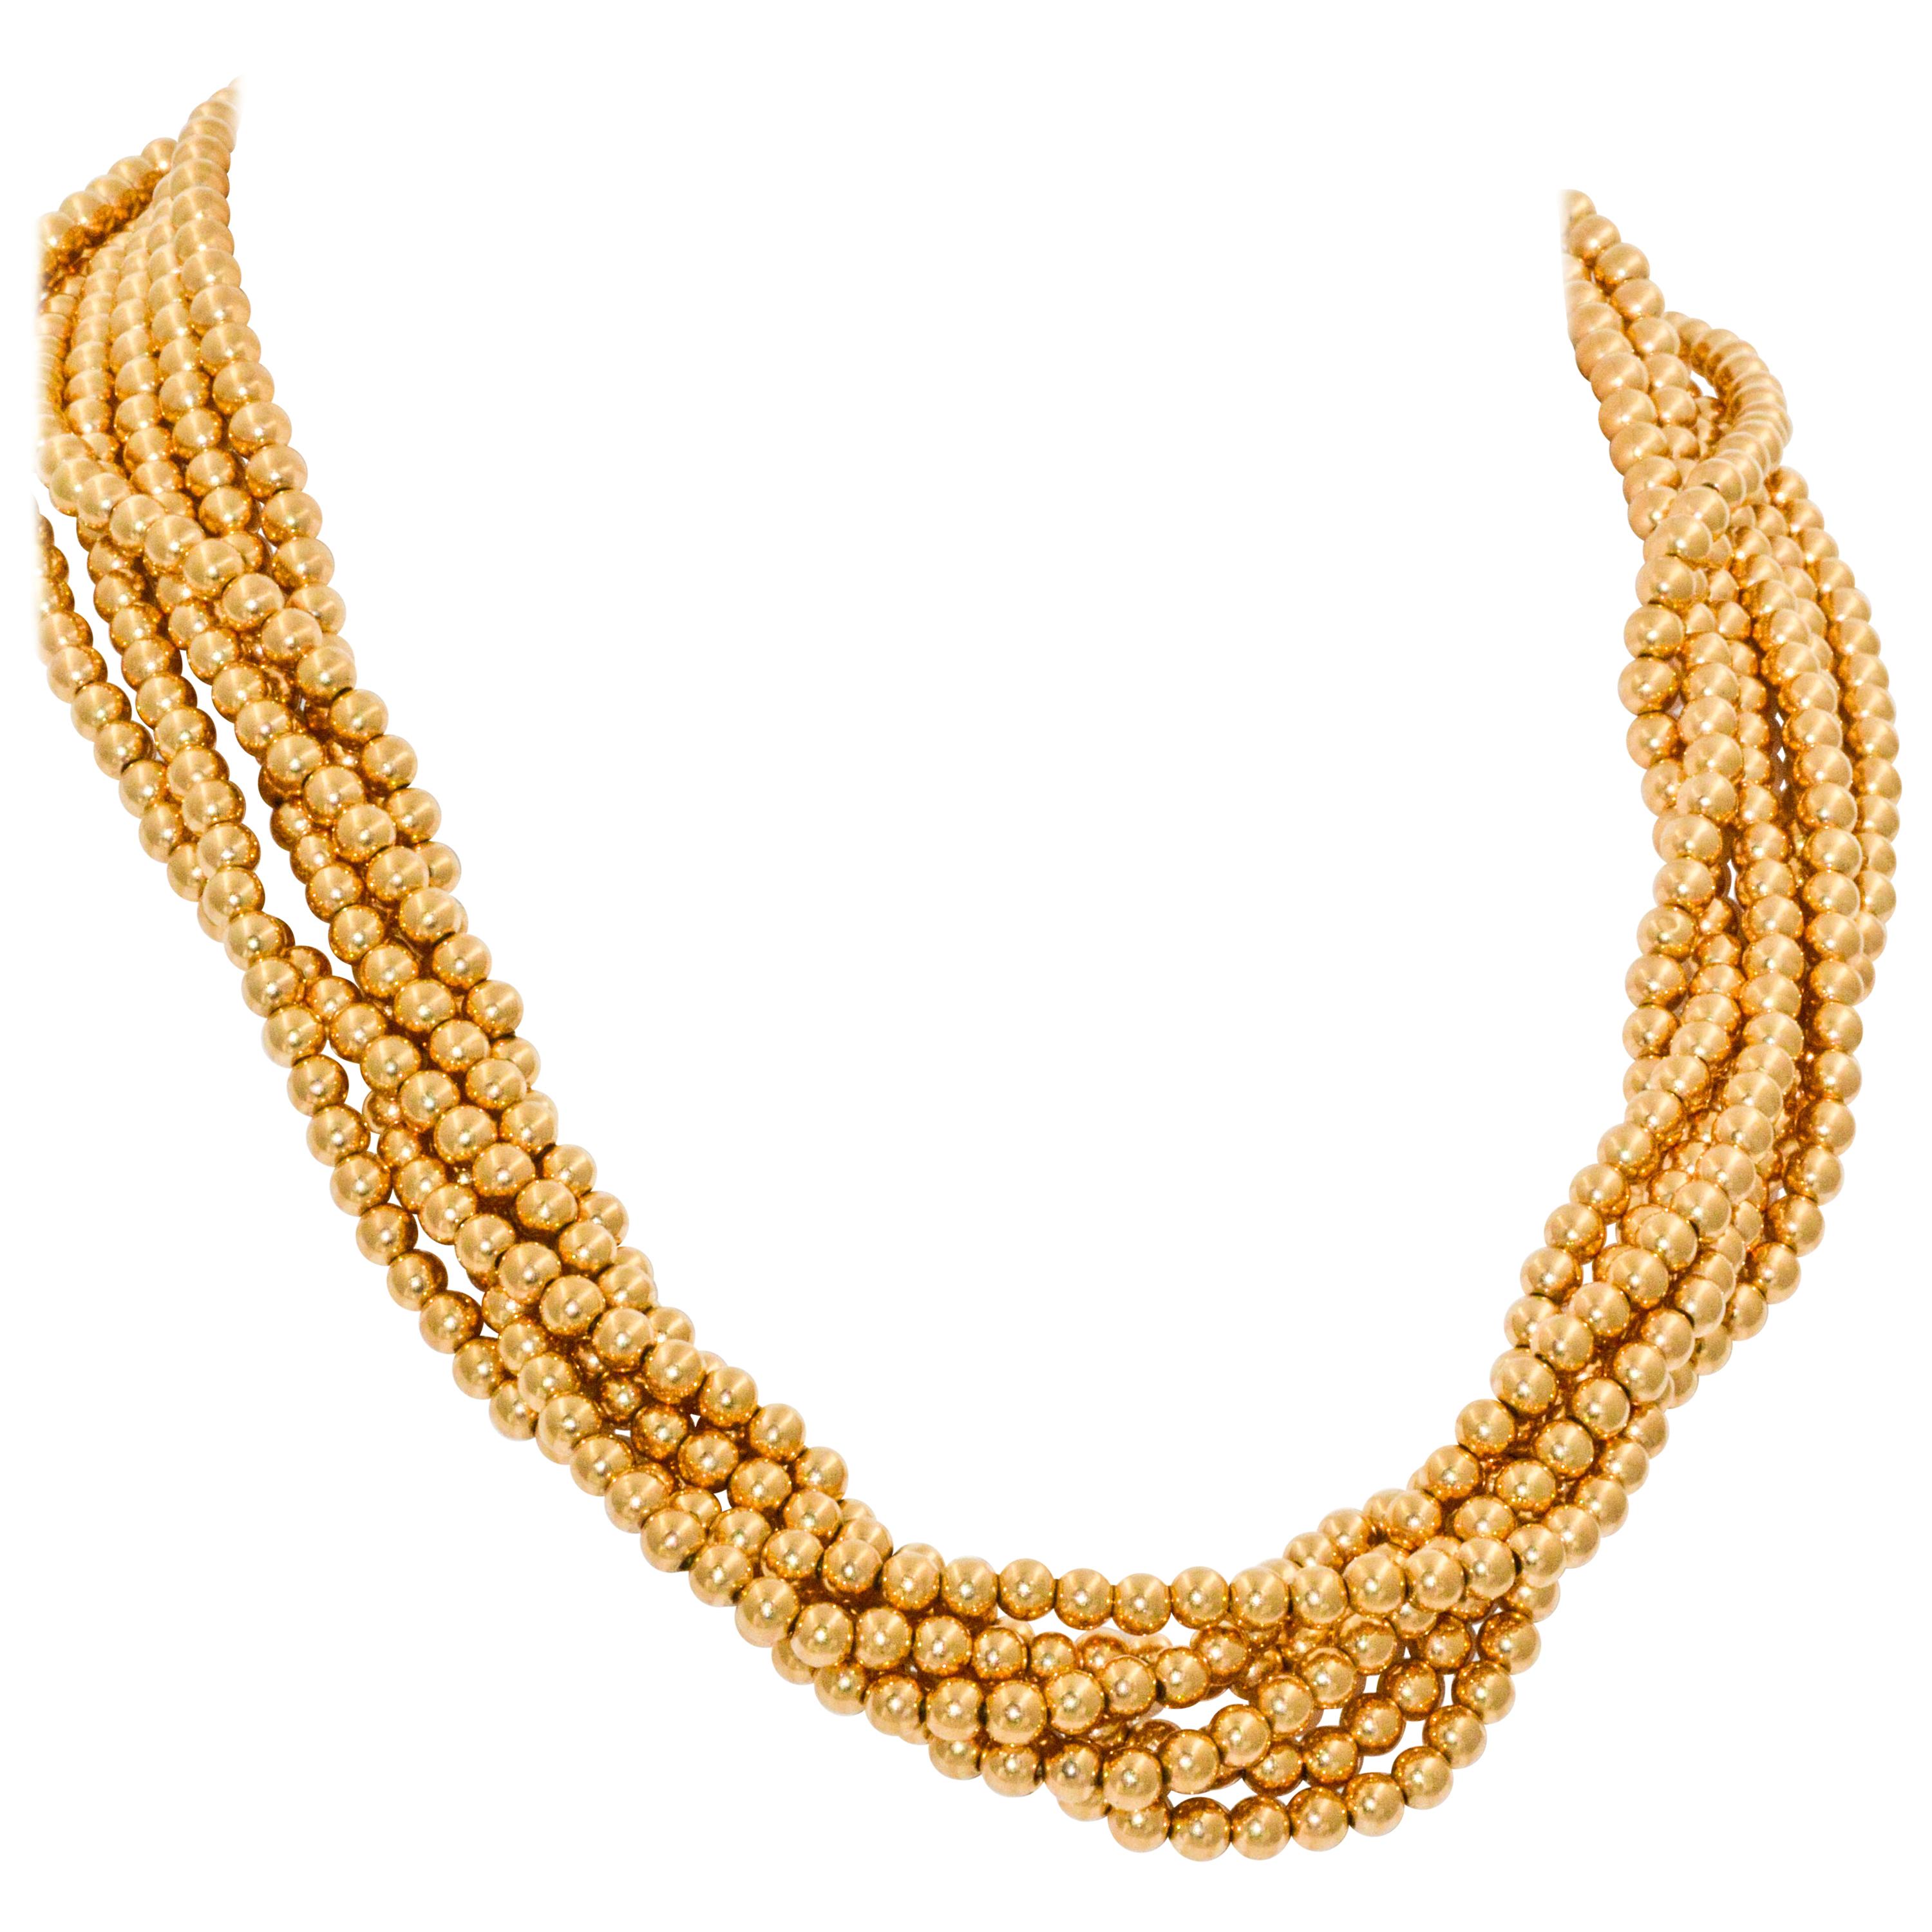 6 Strands 14 Karat Yellow Gold Beads Necklace